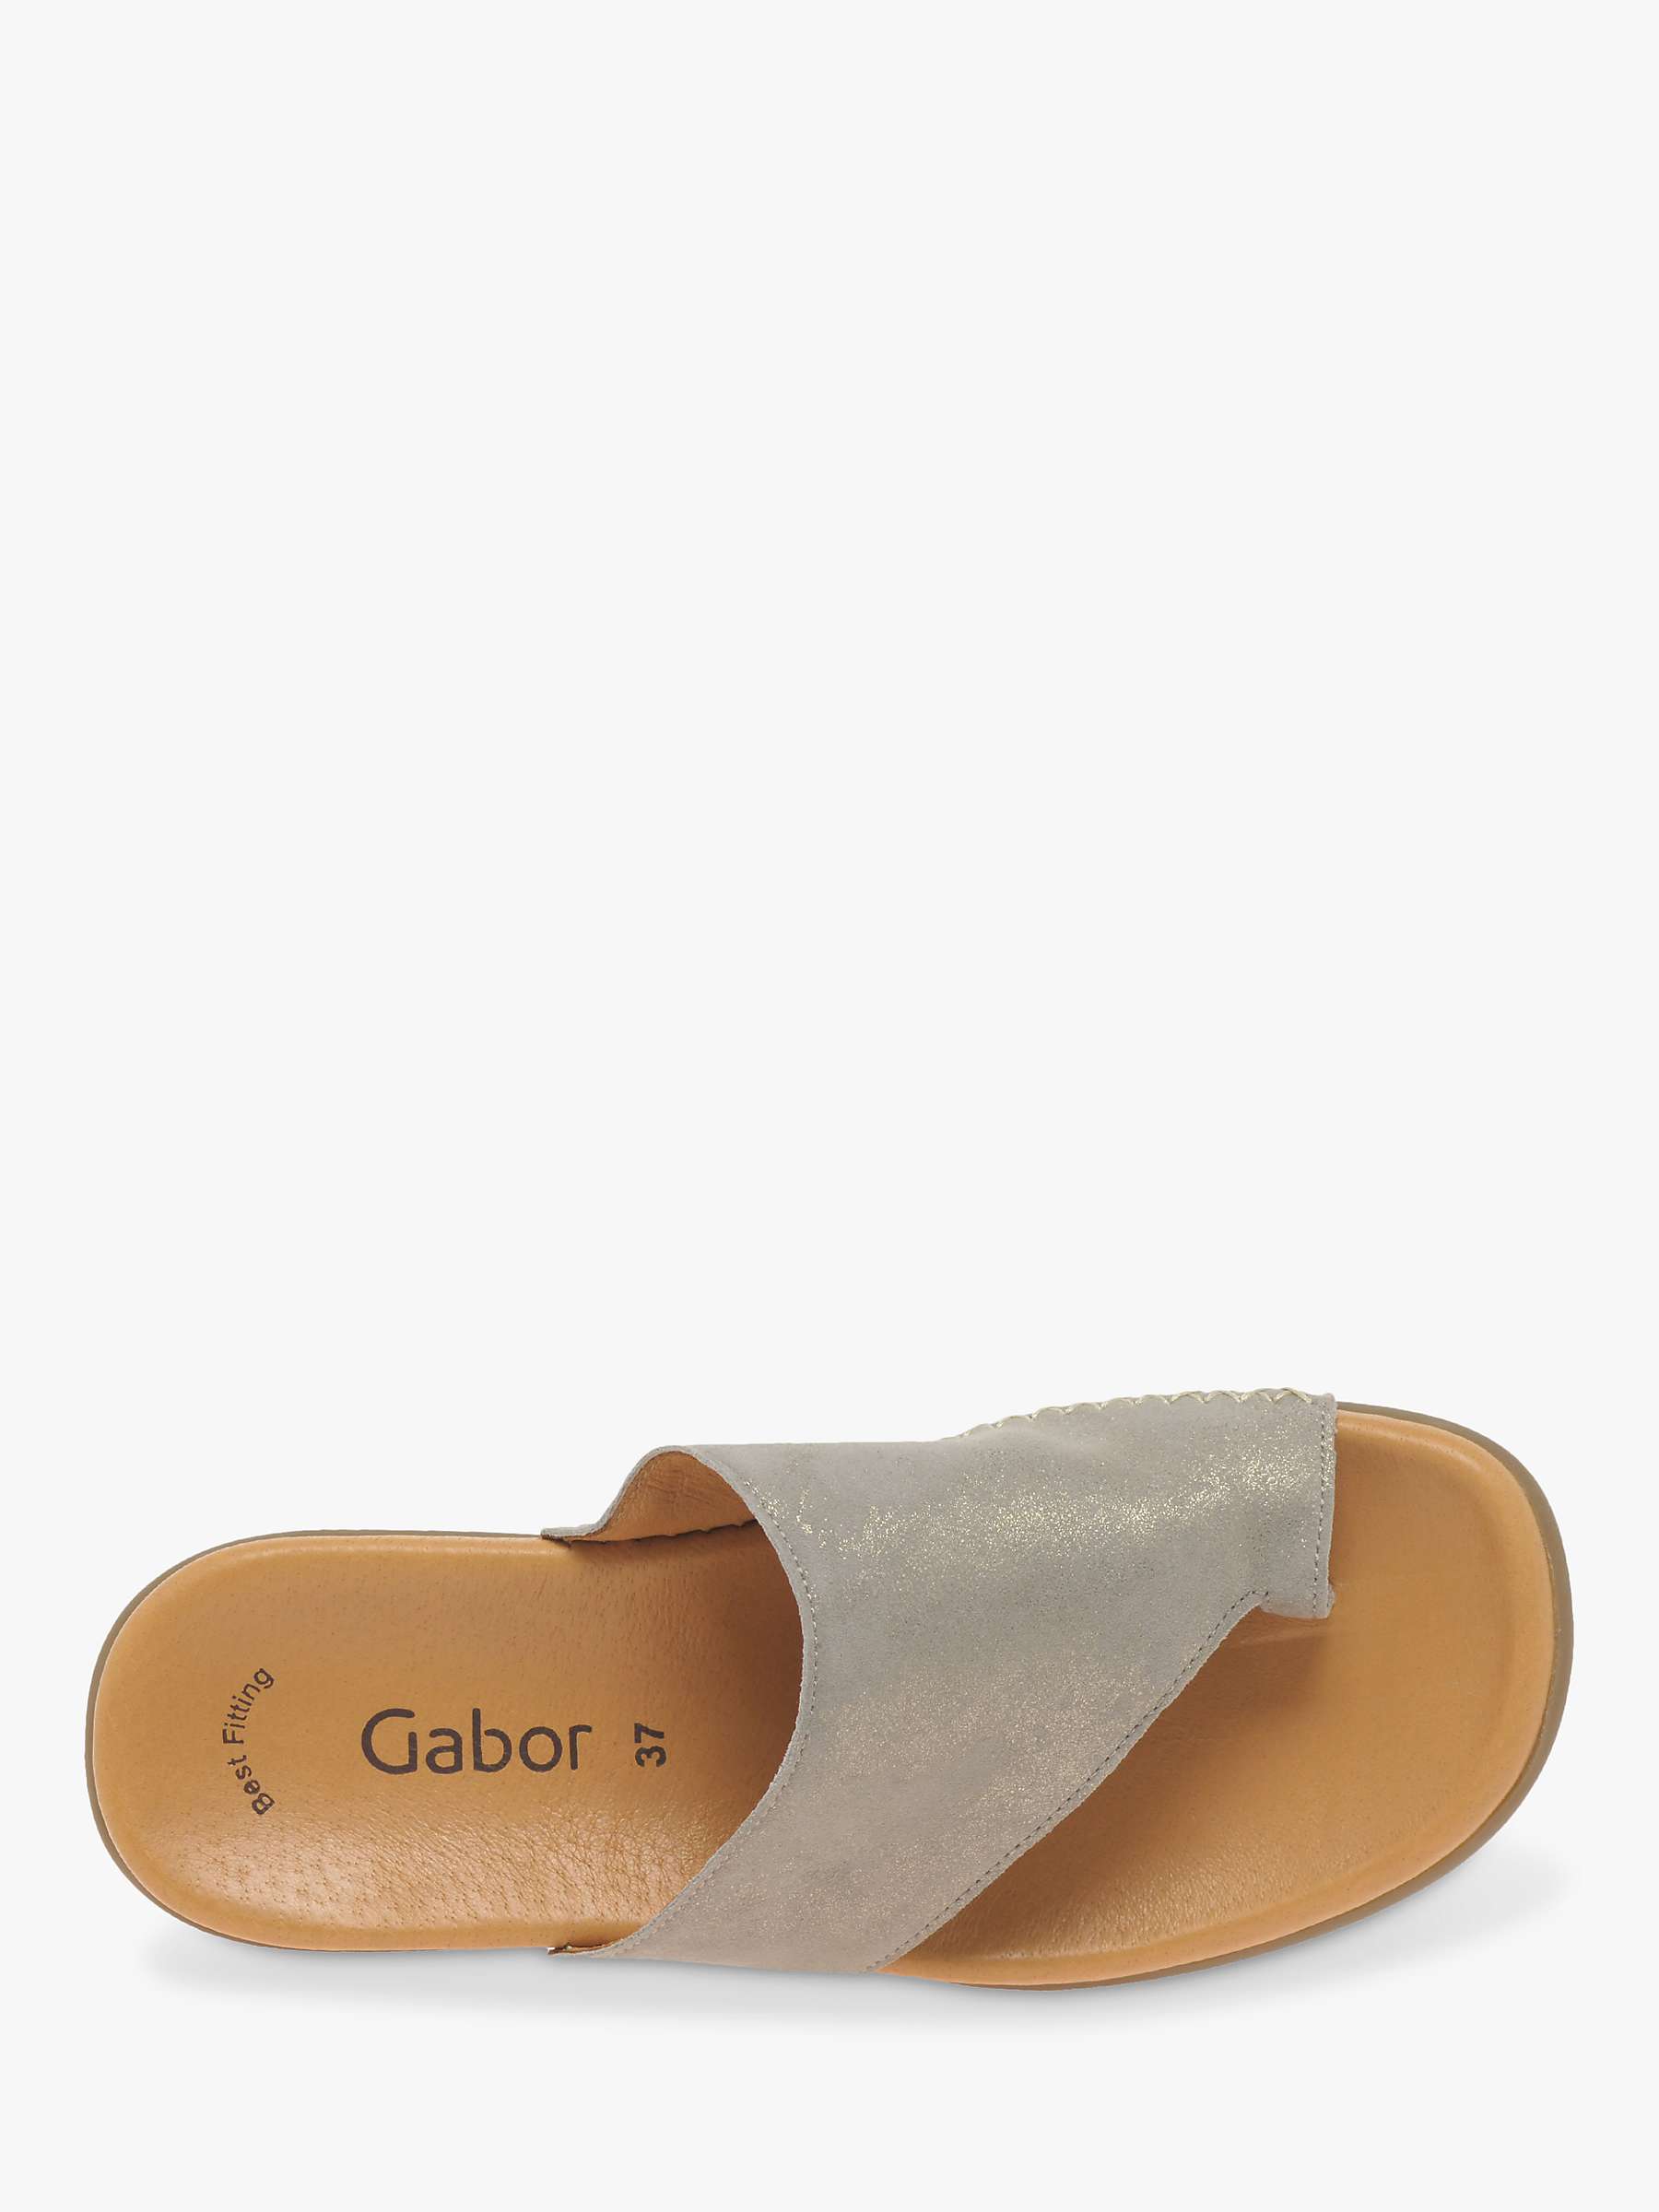 Gabor Lanzarote Leather Mule Neutral John & Partners